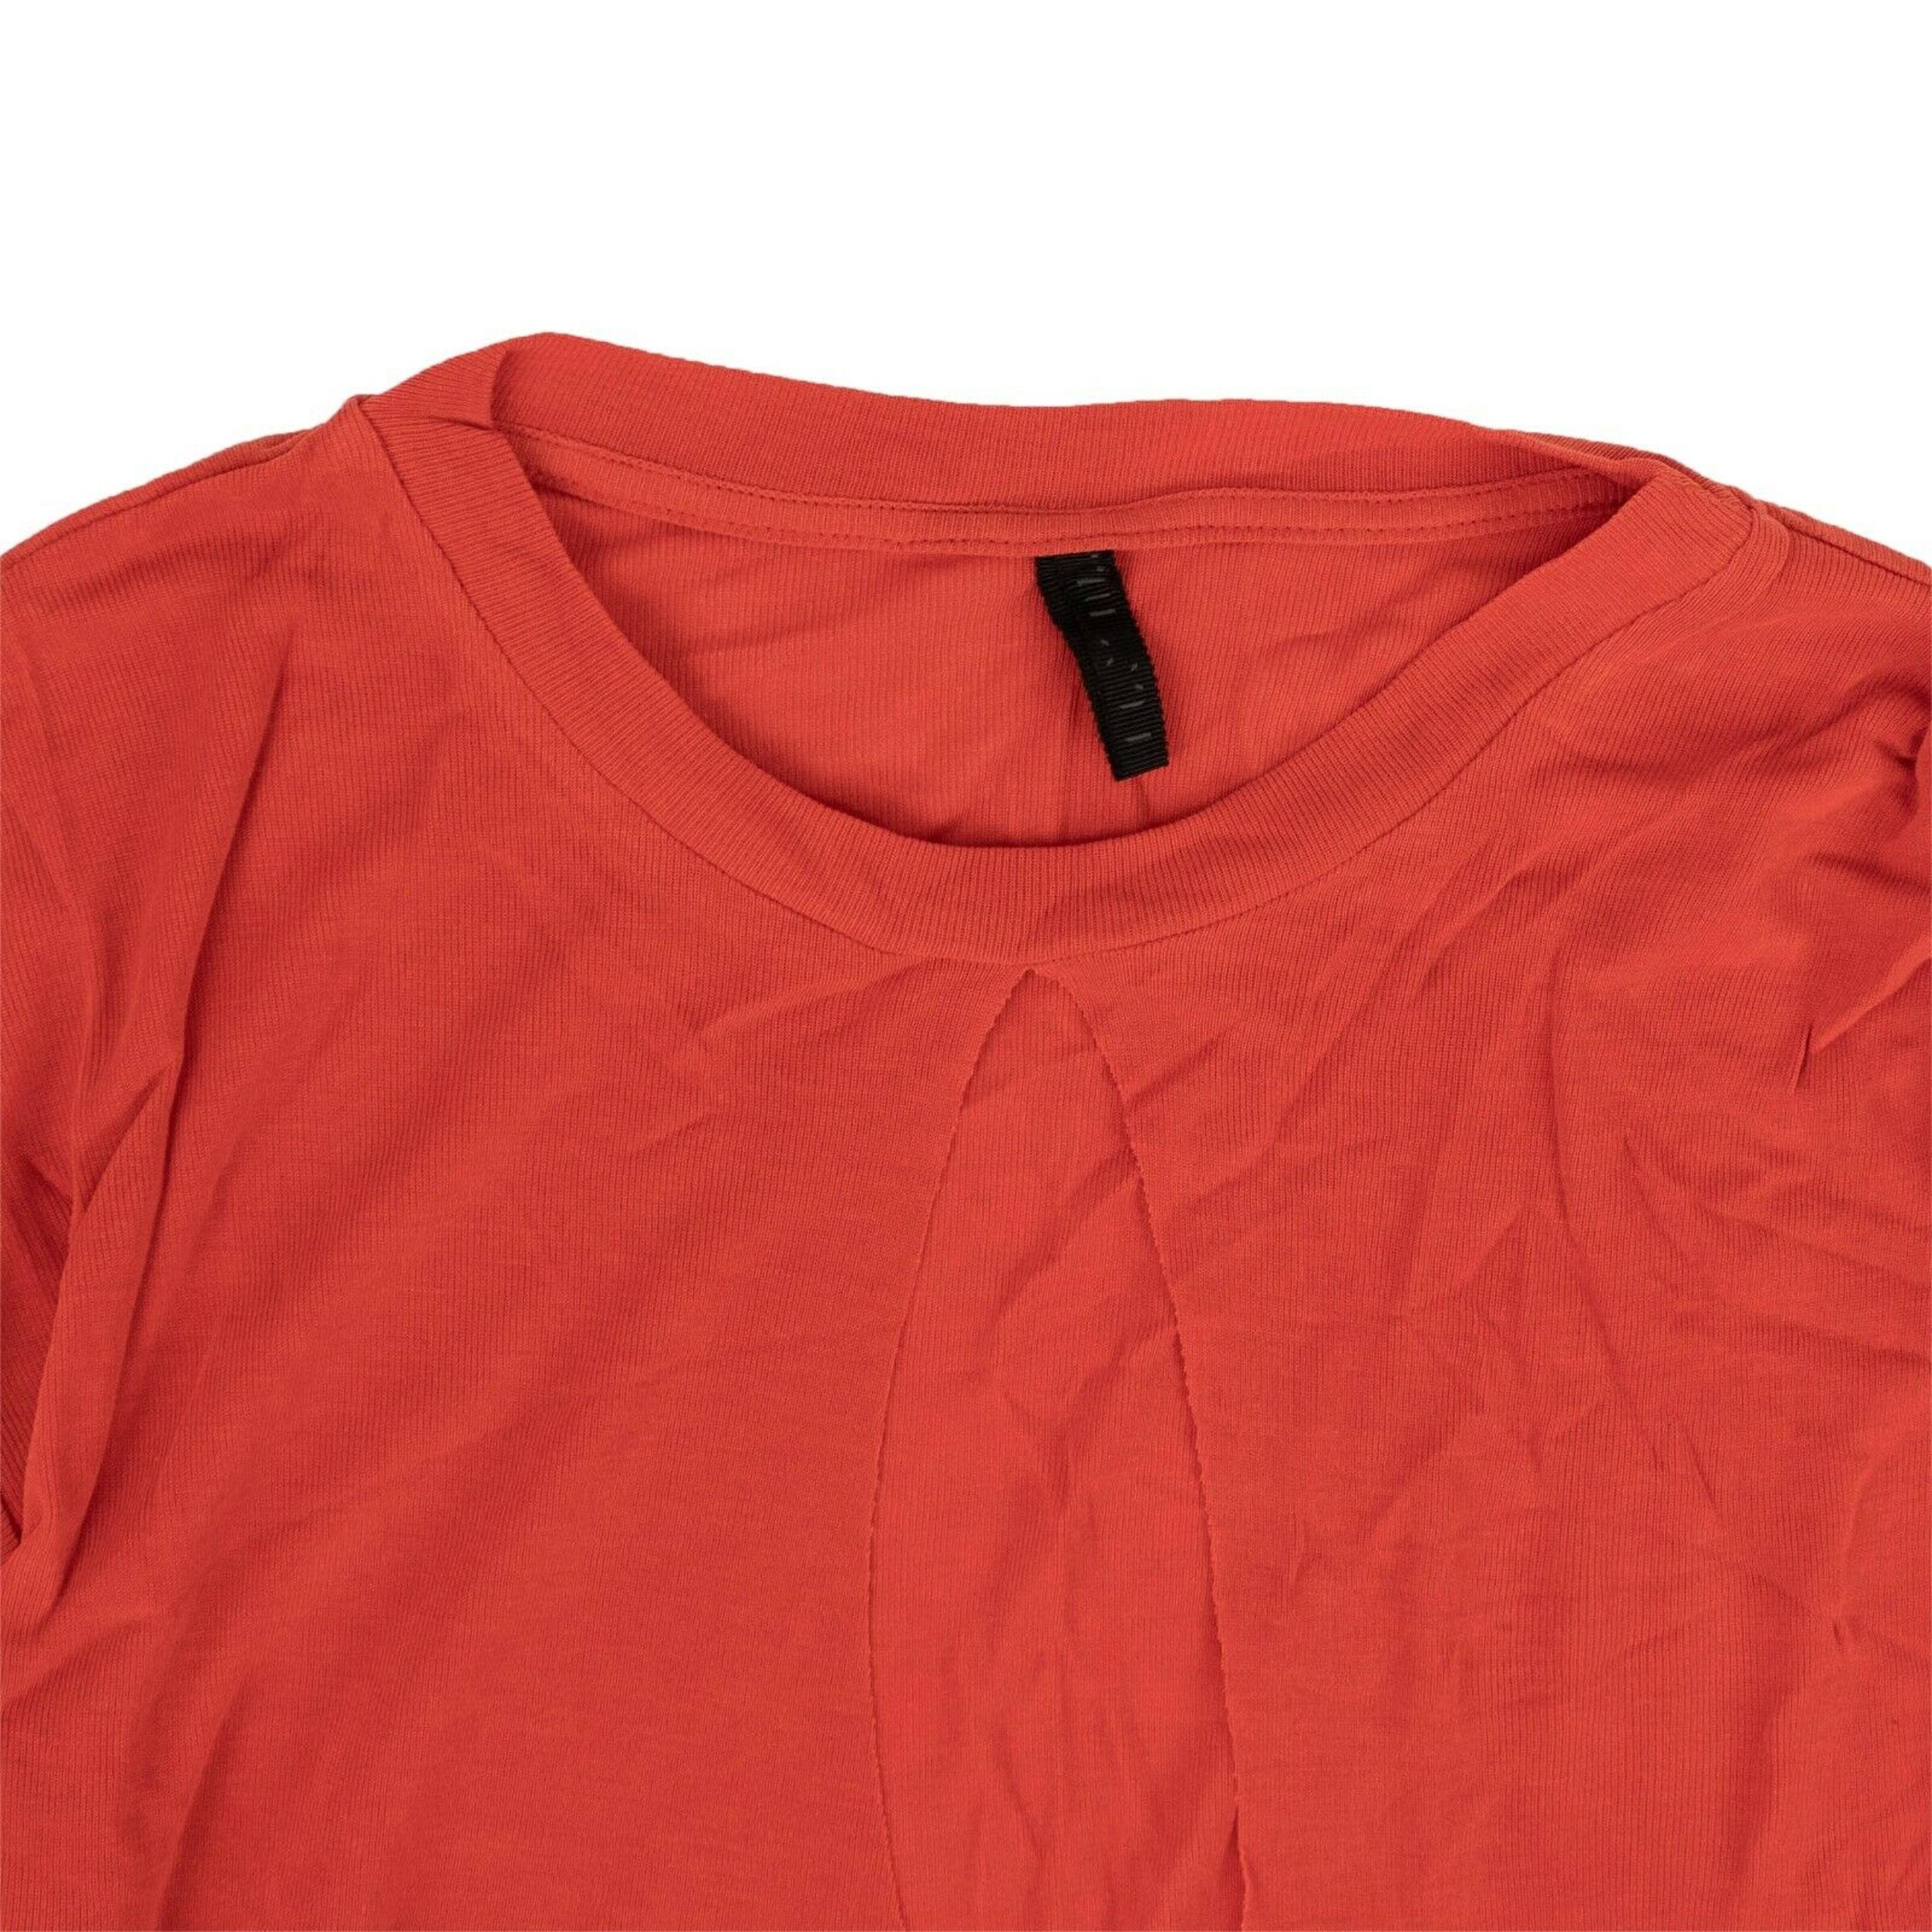 Alternate View 2 of Red Silk Draped T-Shirt